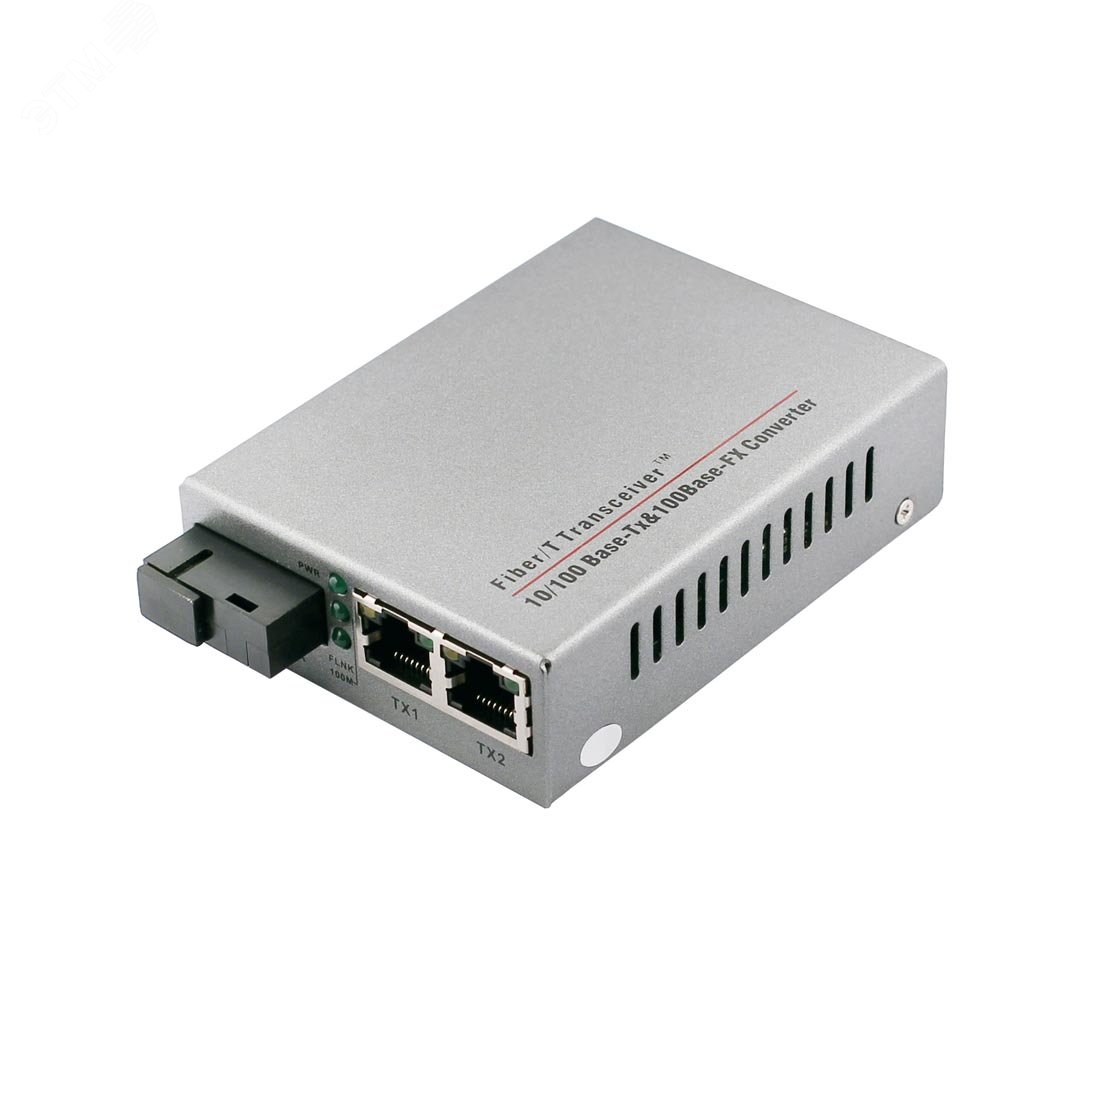 Медиаконвертер оптический 2хRJ45 10/100 Мб/с, 1хSC 100 Мб/с, для кабеля до 20 км OMC-100-21S5b OSNOVO - превью